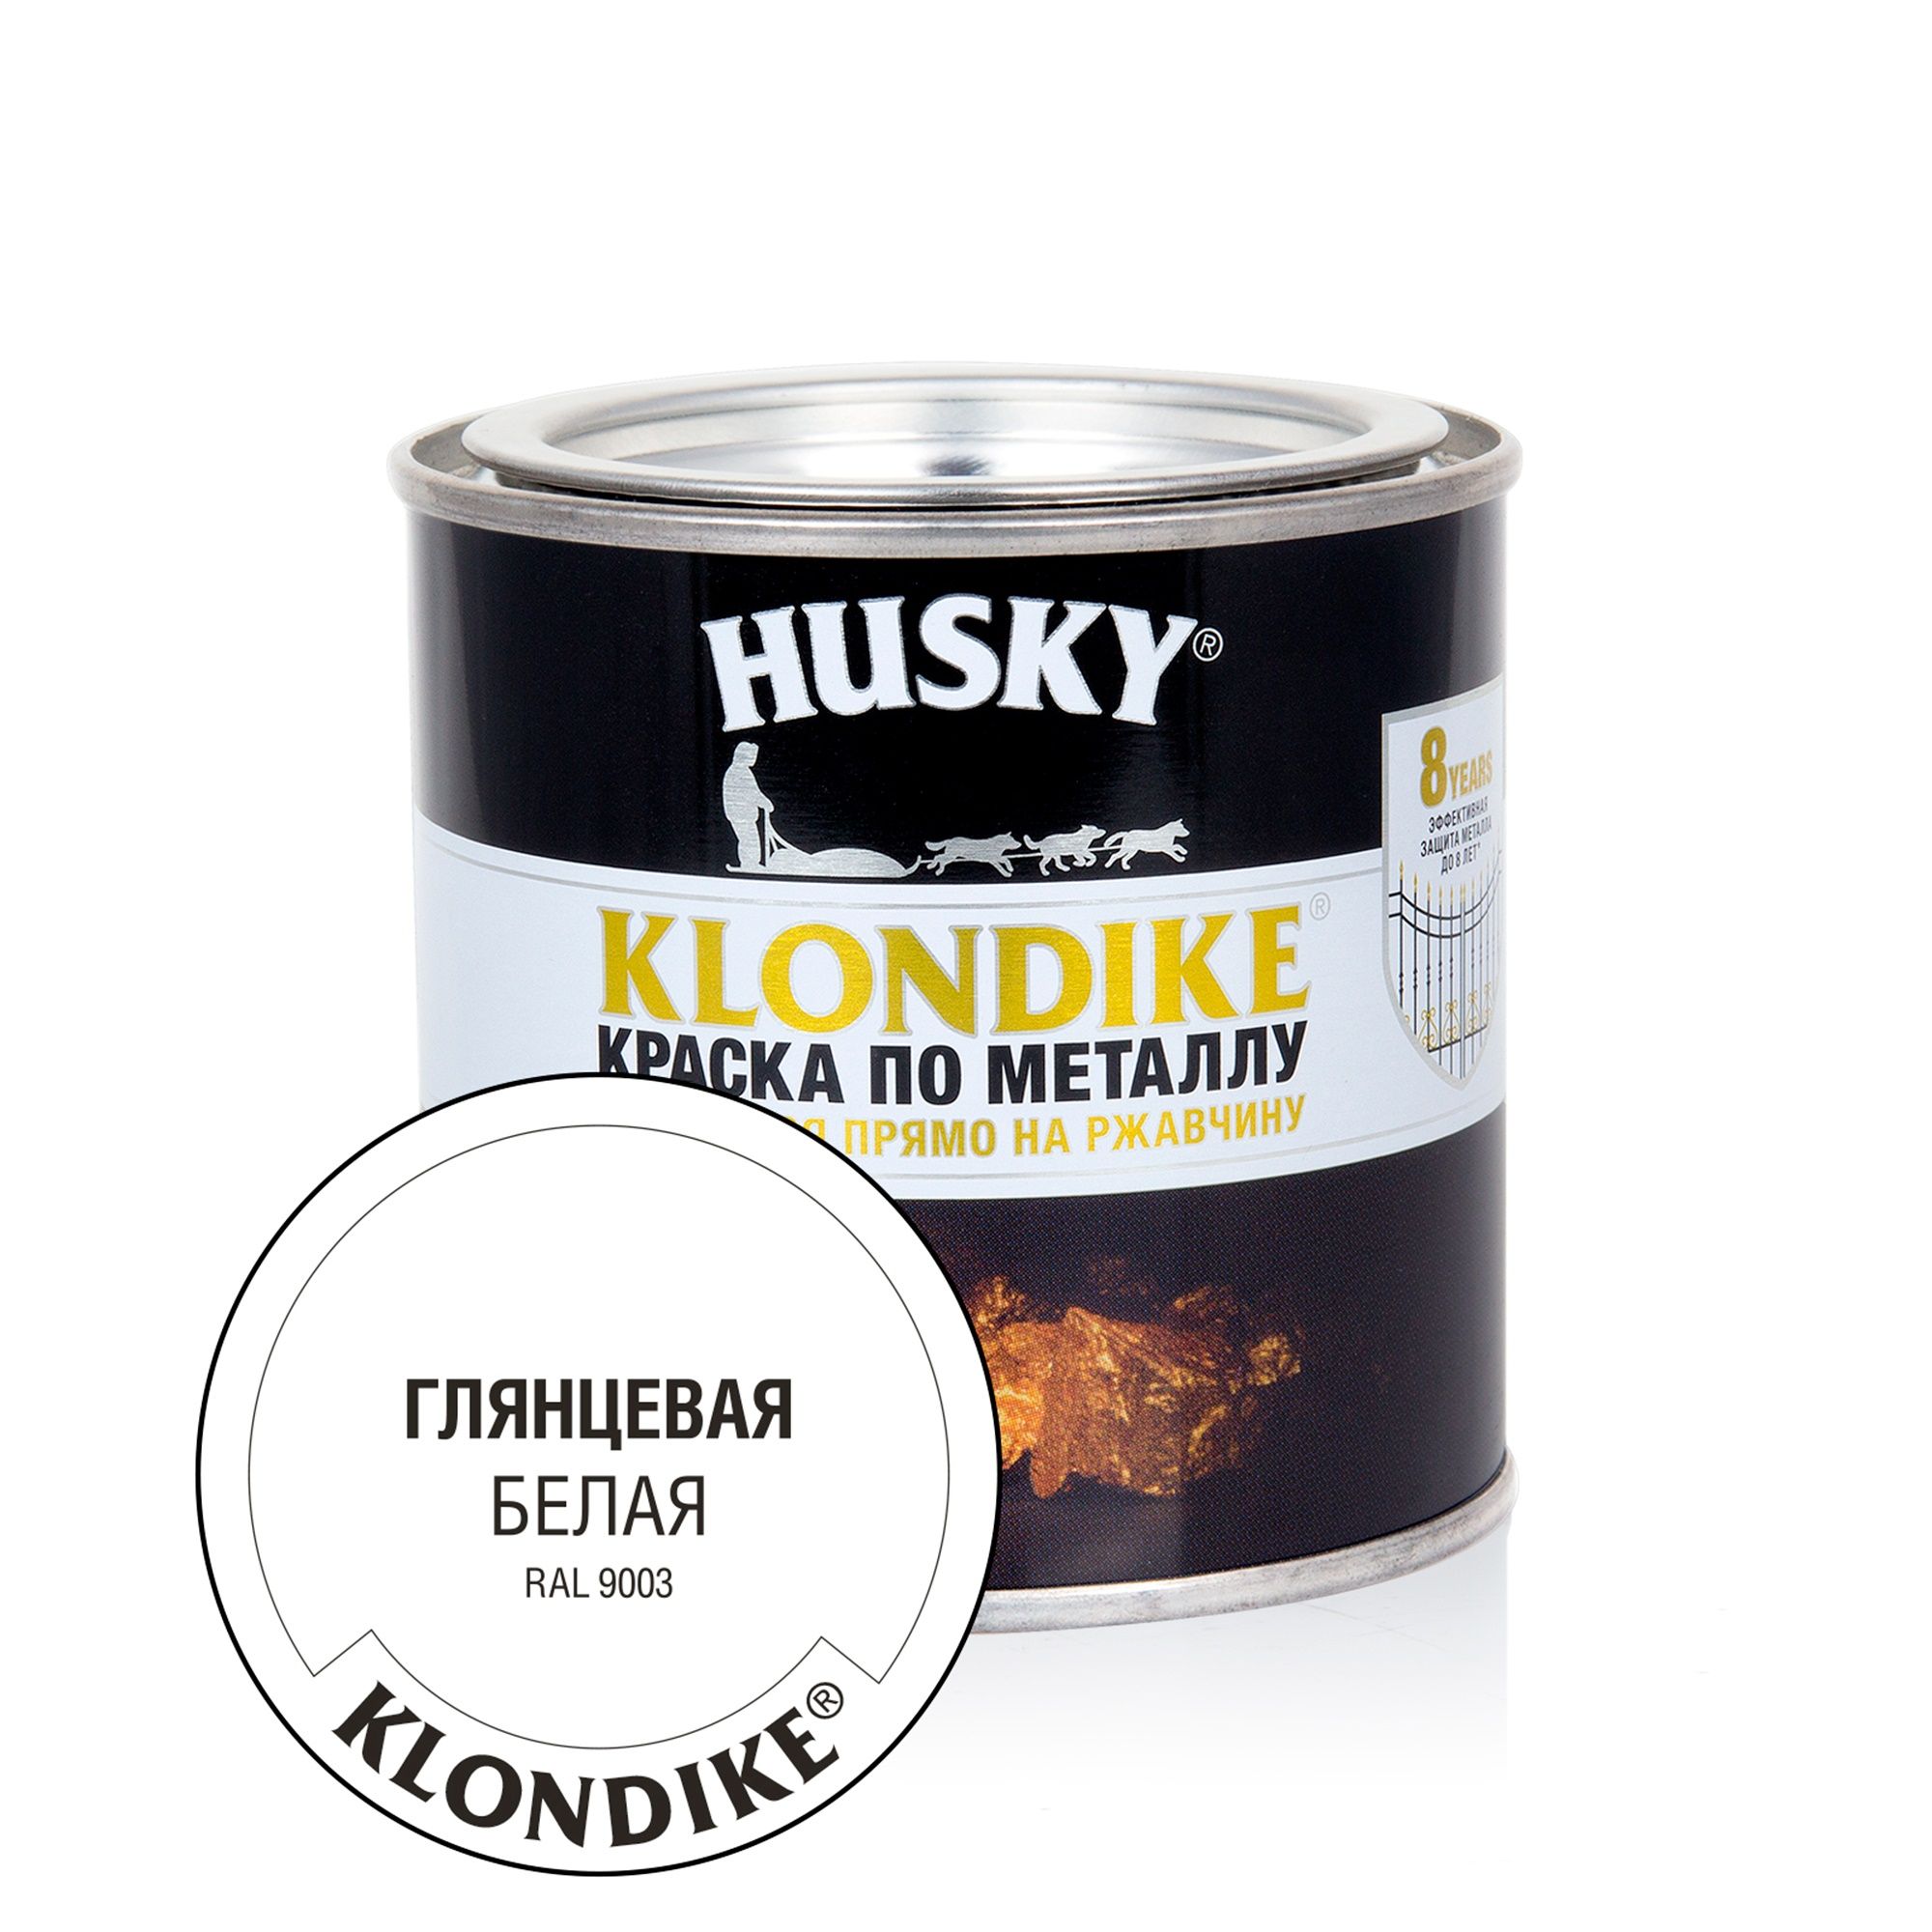 Husky Klondike краска по металлу